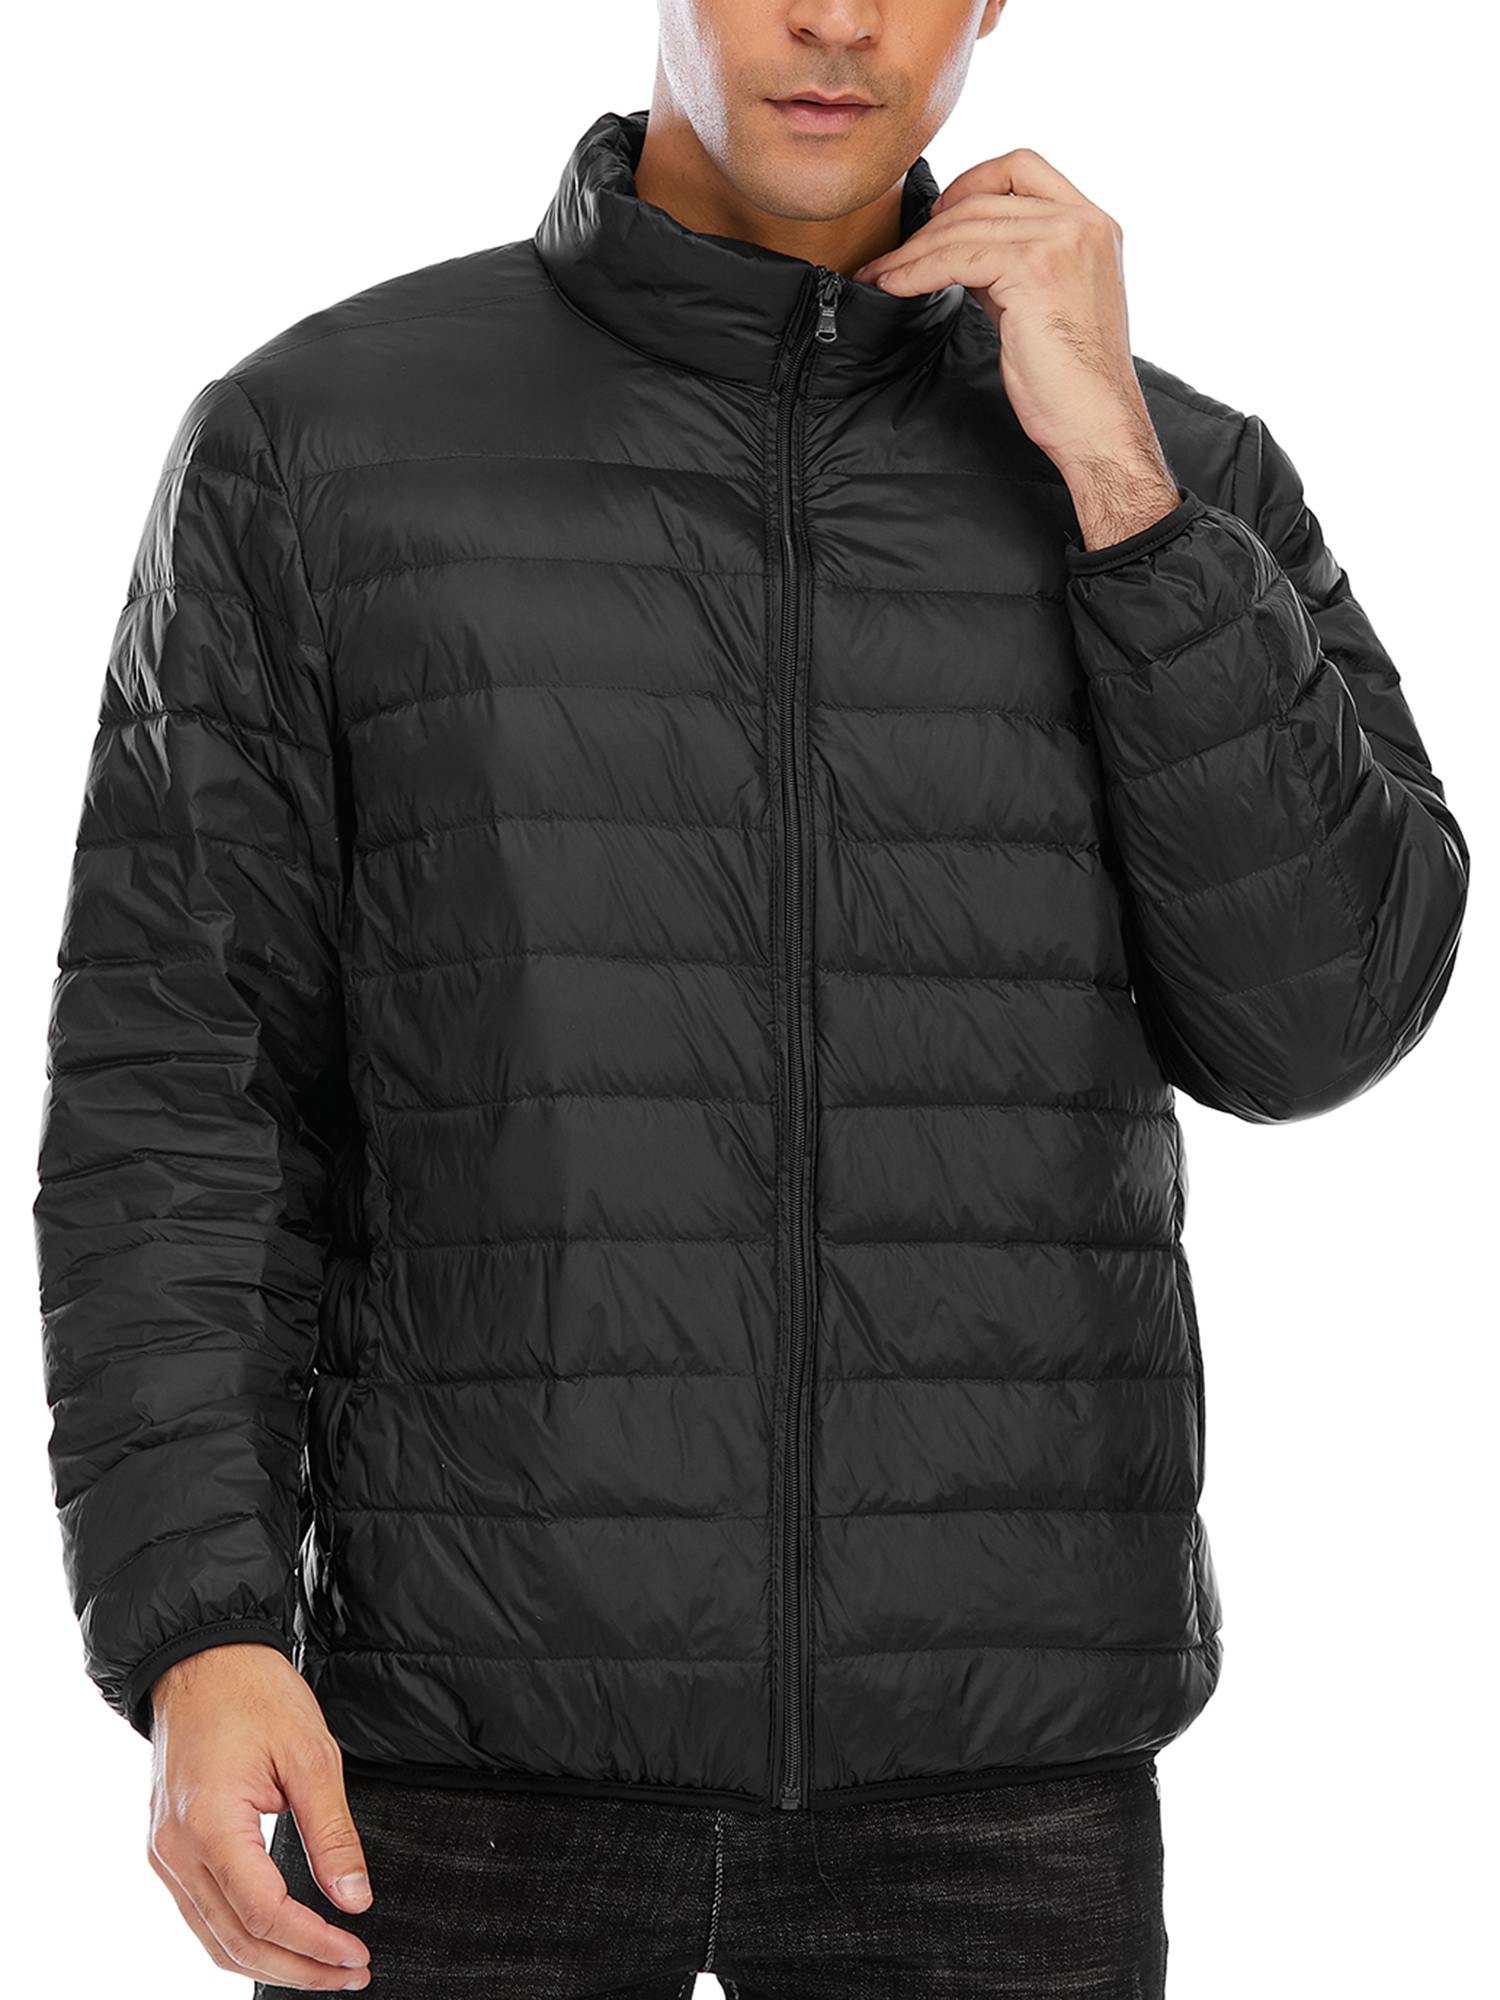 Mens Packable Down Puffer Jacket Lightweight, Water-Resistent Zipper Jackets Windproof Winter Insulation Puffer Coat Outdoor,Black S-2XL - image 1 of 8